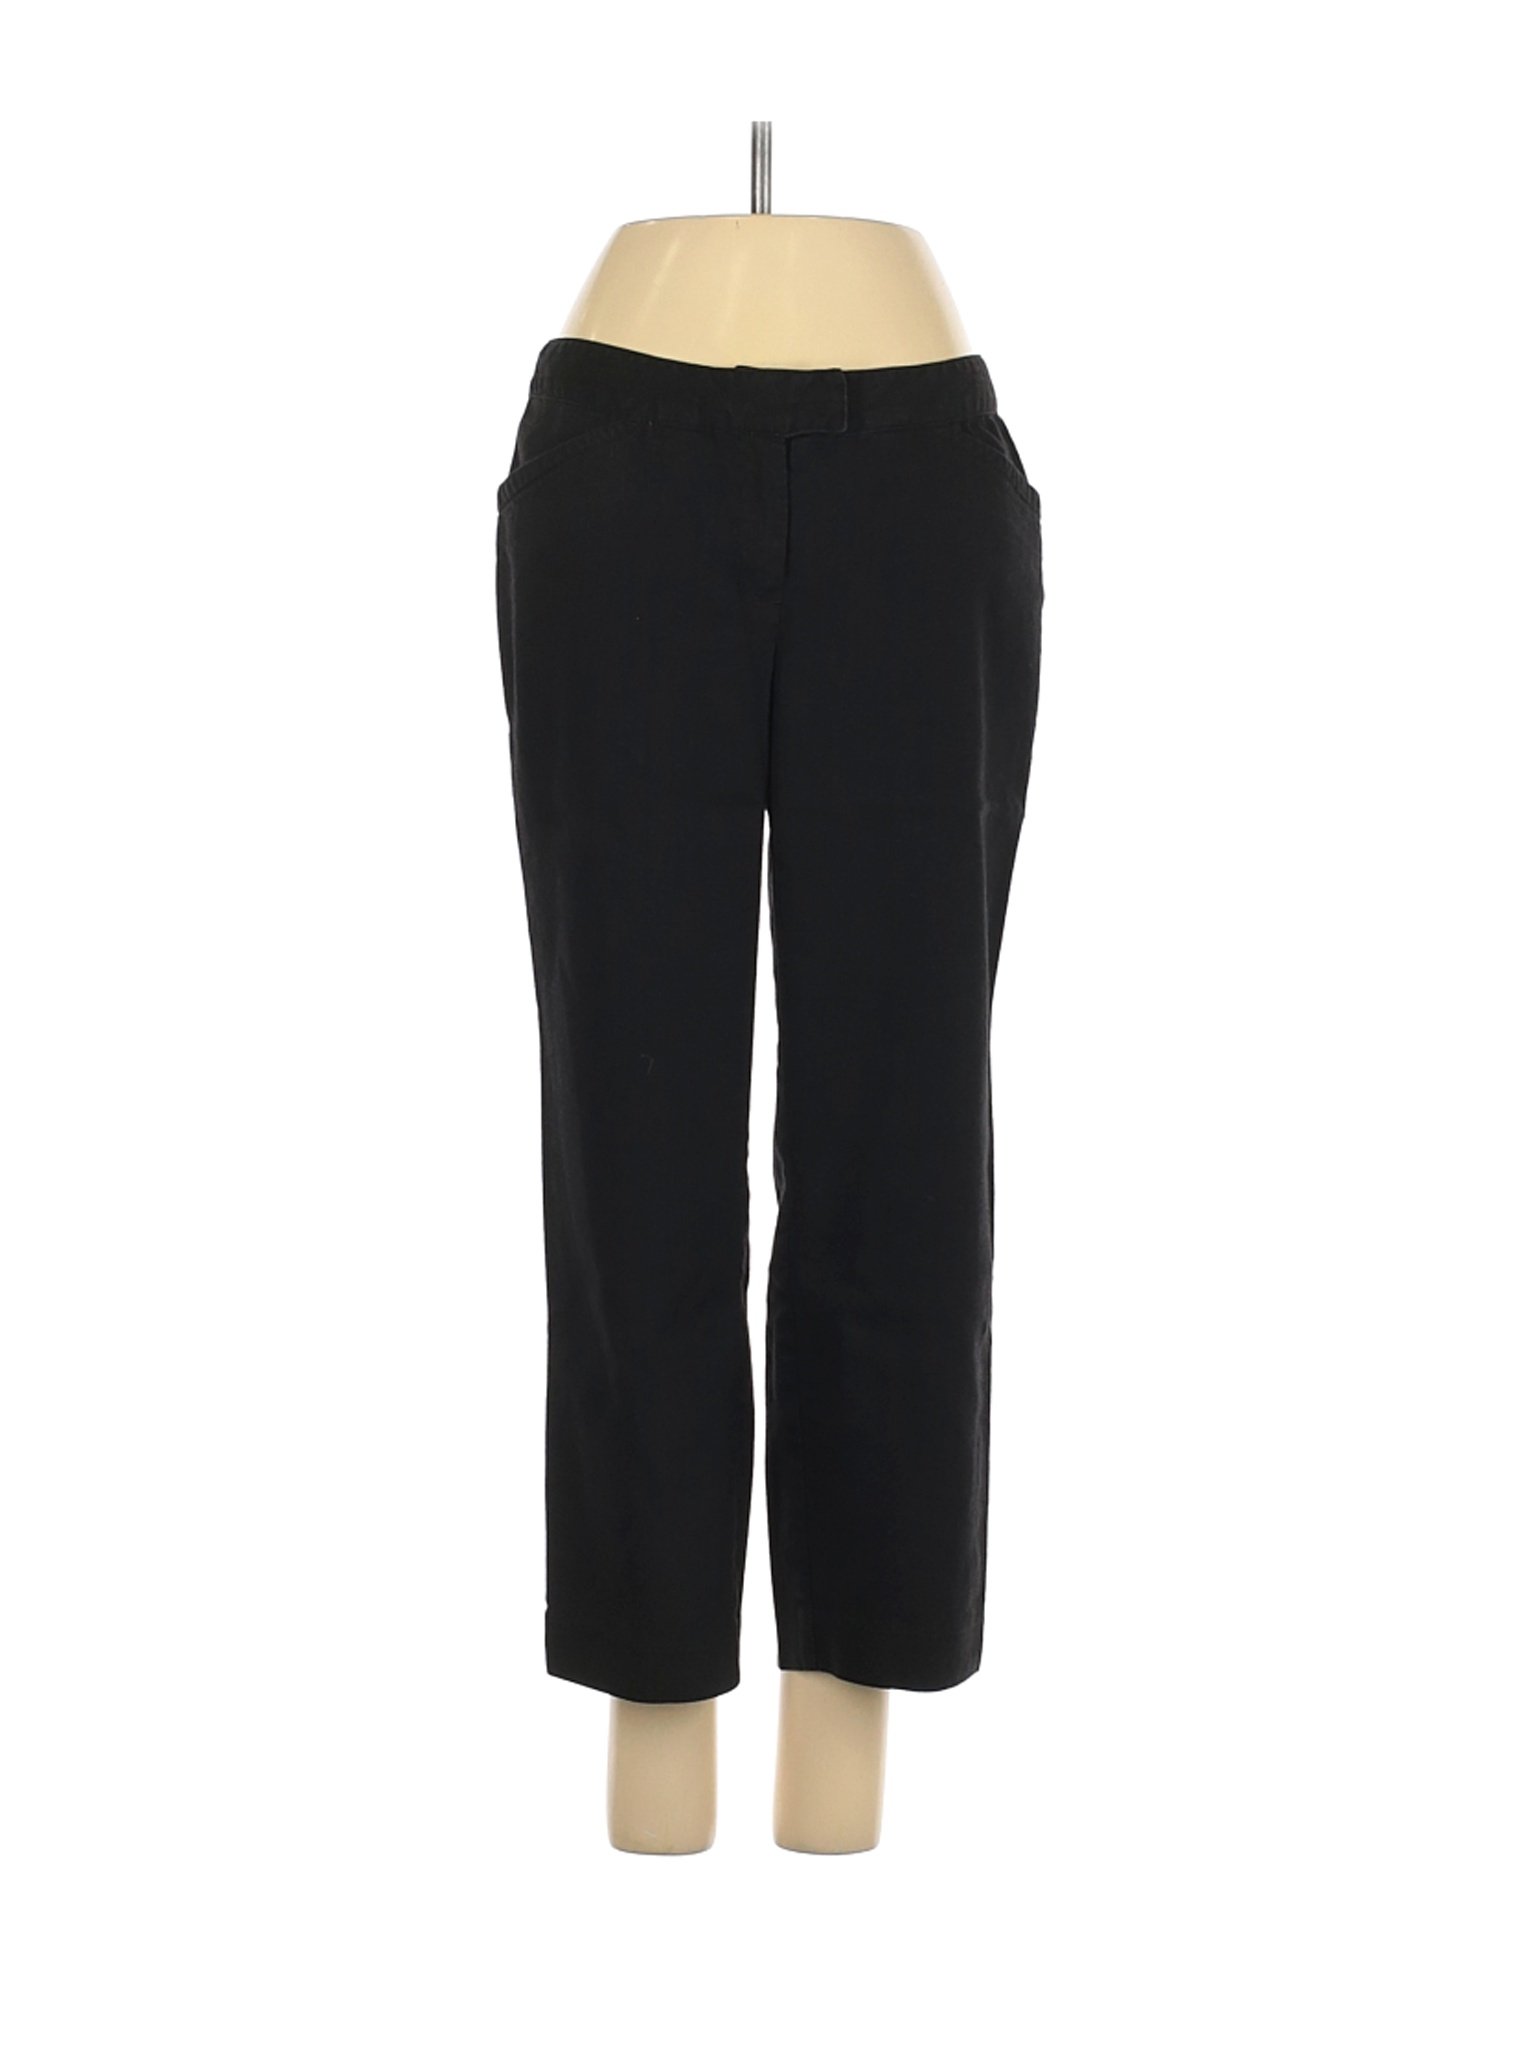 J.Jill Women Black Linen Pants 4 Petites | eBay